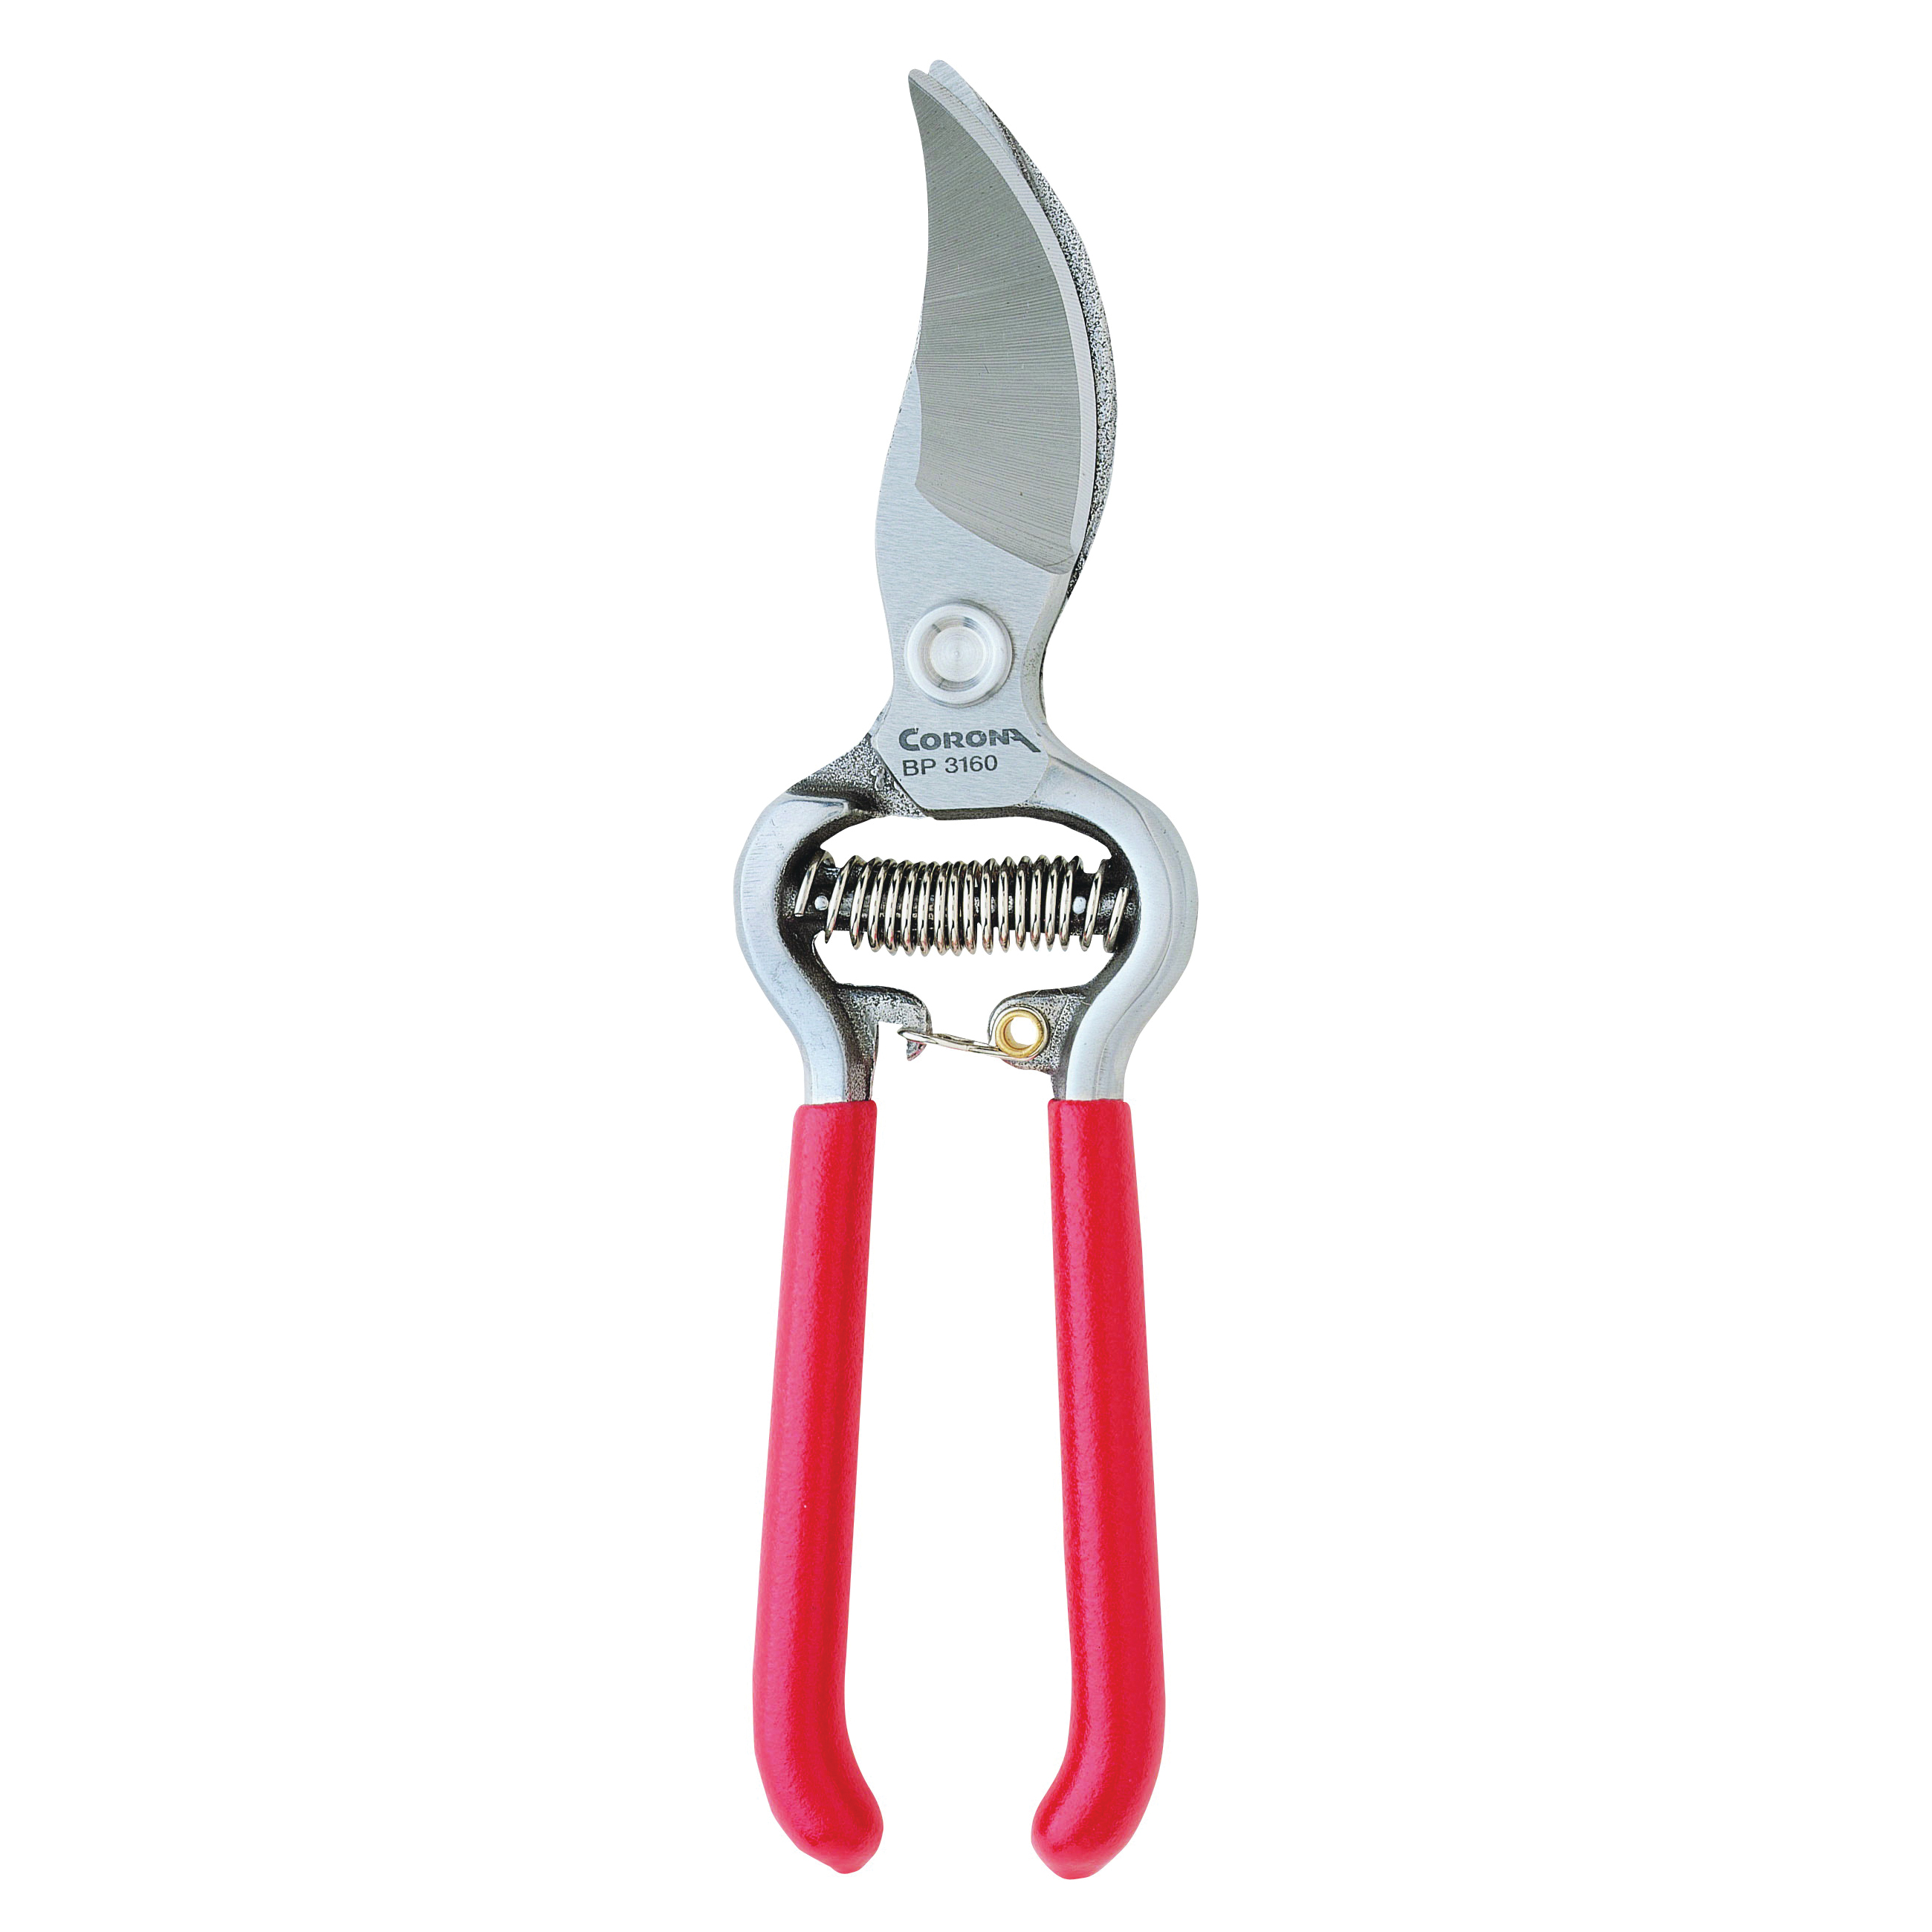 CORONA BP 3160 Pruning Shear, 3/4 in Cutting Capacity, Steel Blade, Bypass Blade, Steel Handle - 1